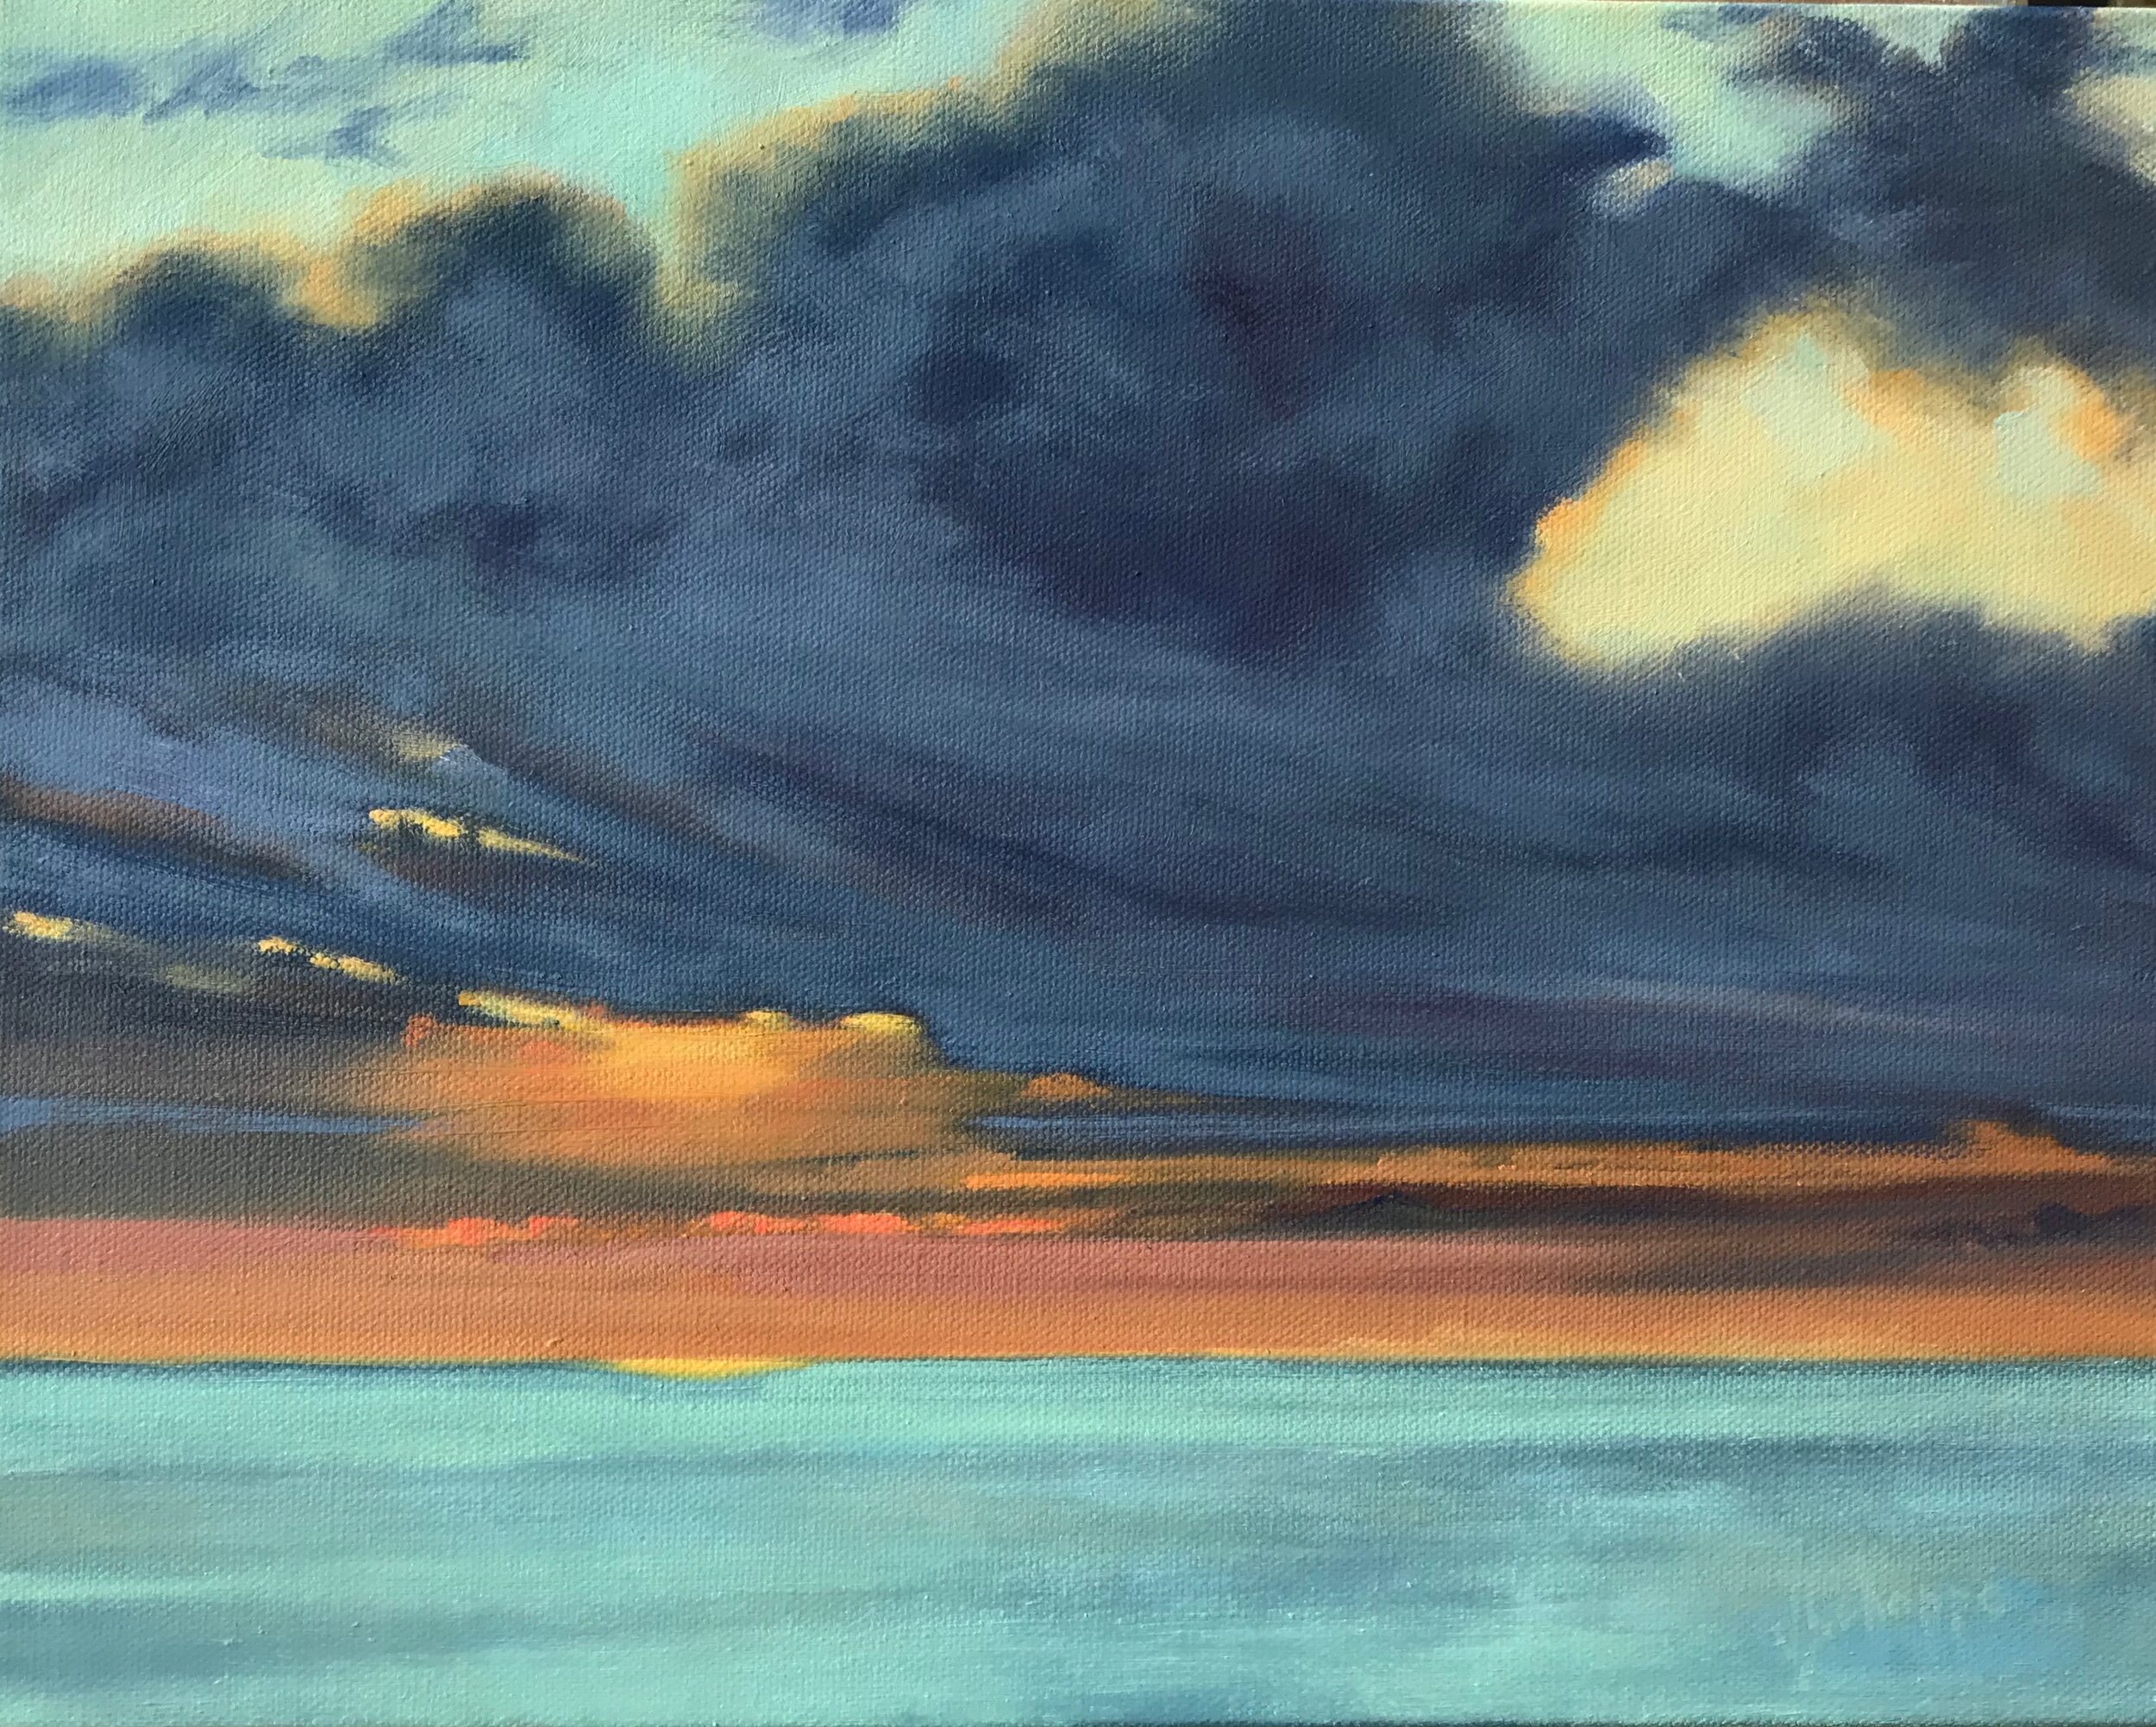 Aquinnah Sunset  Oil  11x14  $750